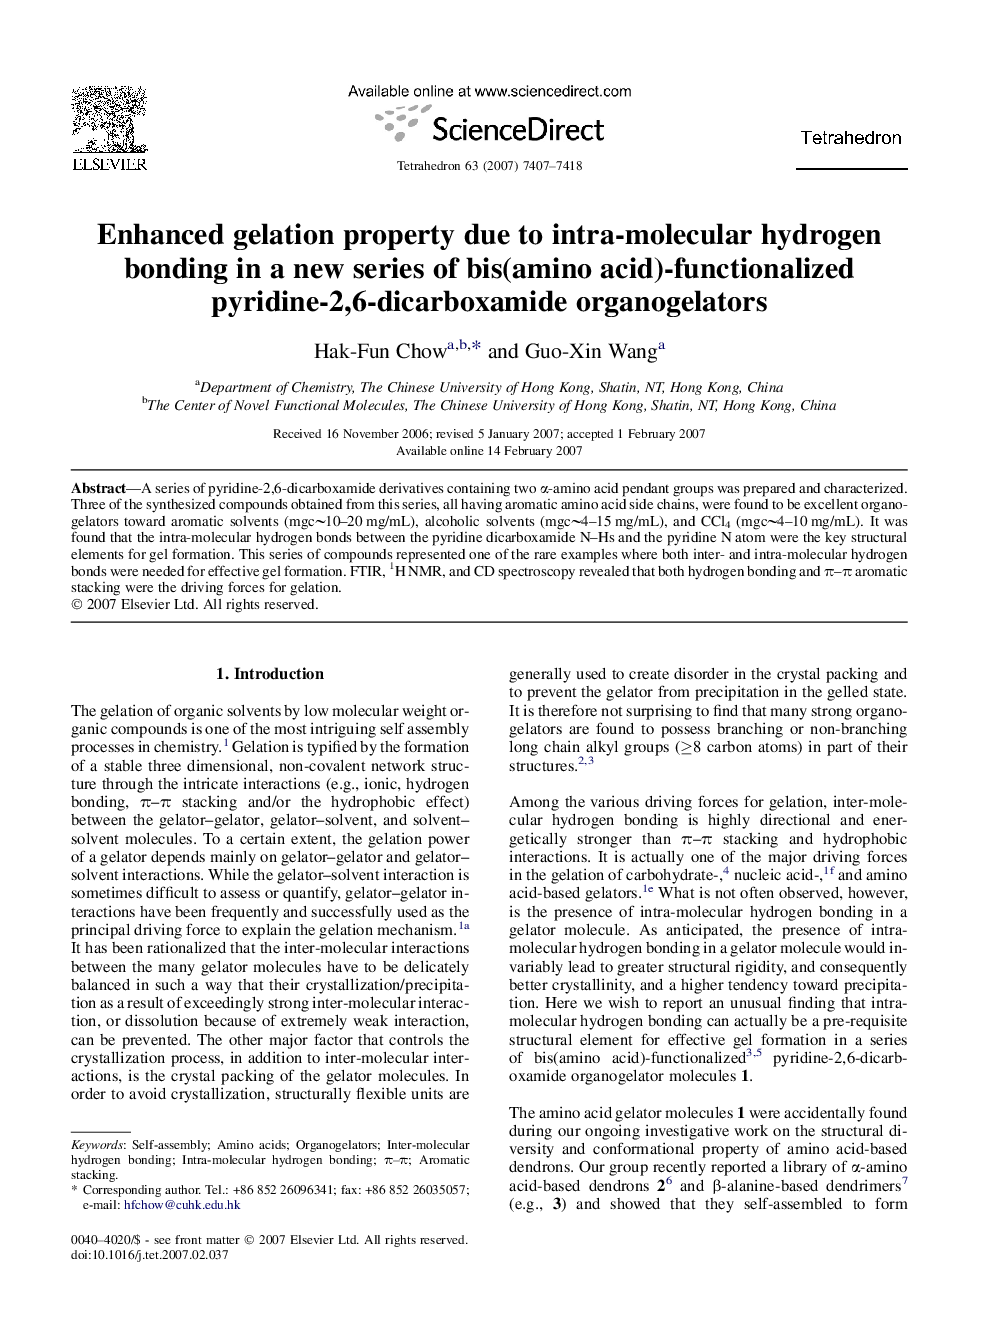 Enhanced gelation property due to intra-molecular hydrogen bonding in a new series of bis(amino acid)-functionalized pyridine-2,6-dicarboxamide organogelators